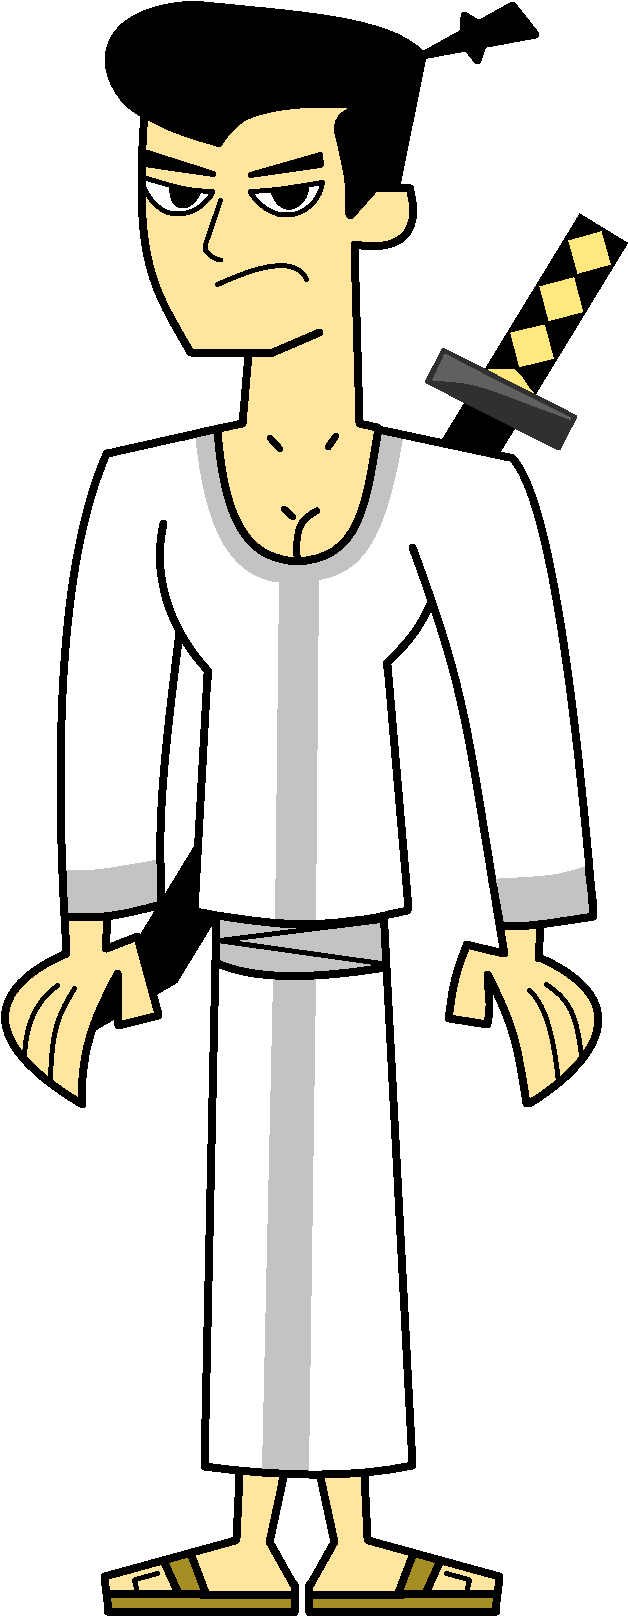 Cartoon Of A Monkey Wearing A White Robe